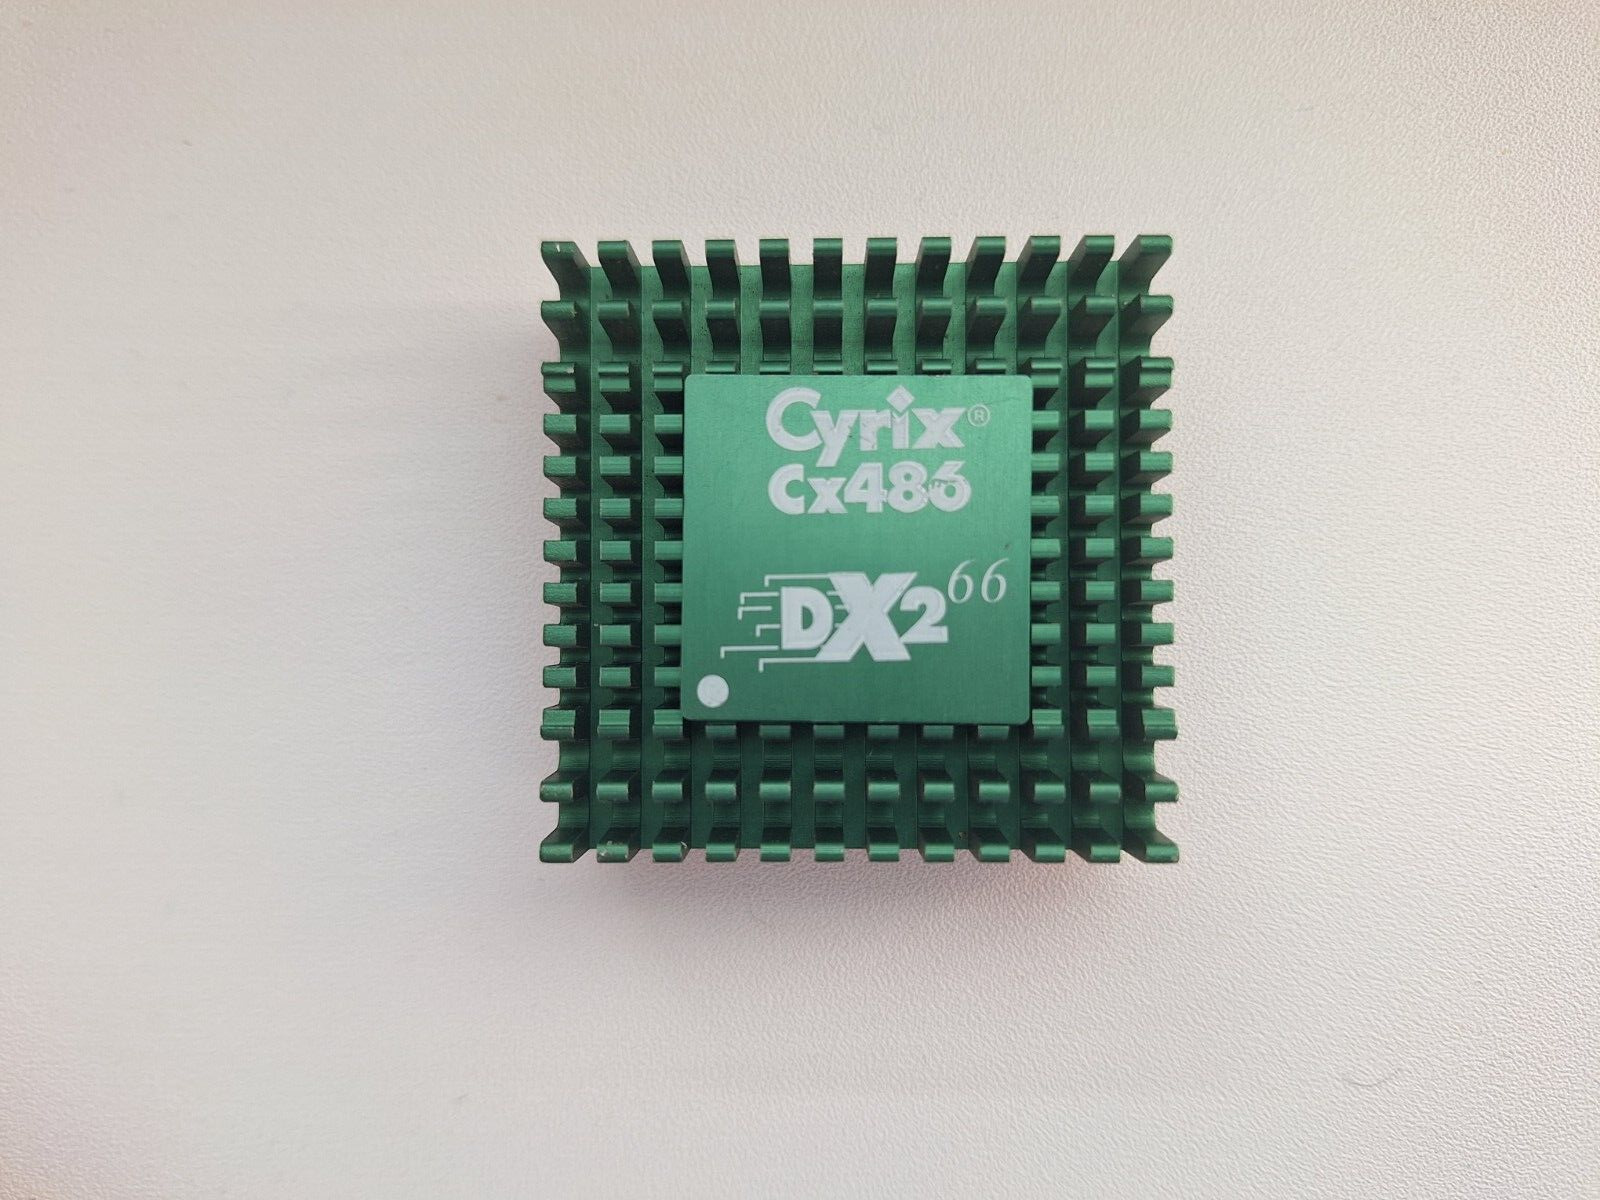 Cyrix Cx486DX2-66 Cx486DX2-66 with green heatsink vintage CPU GOLD